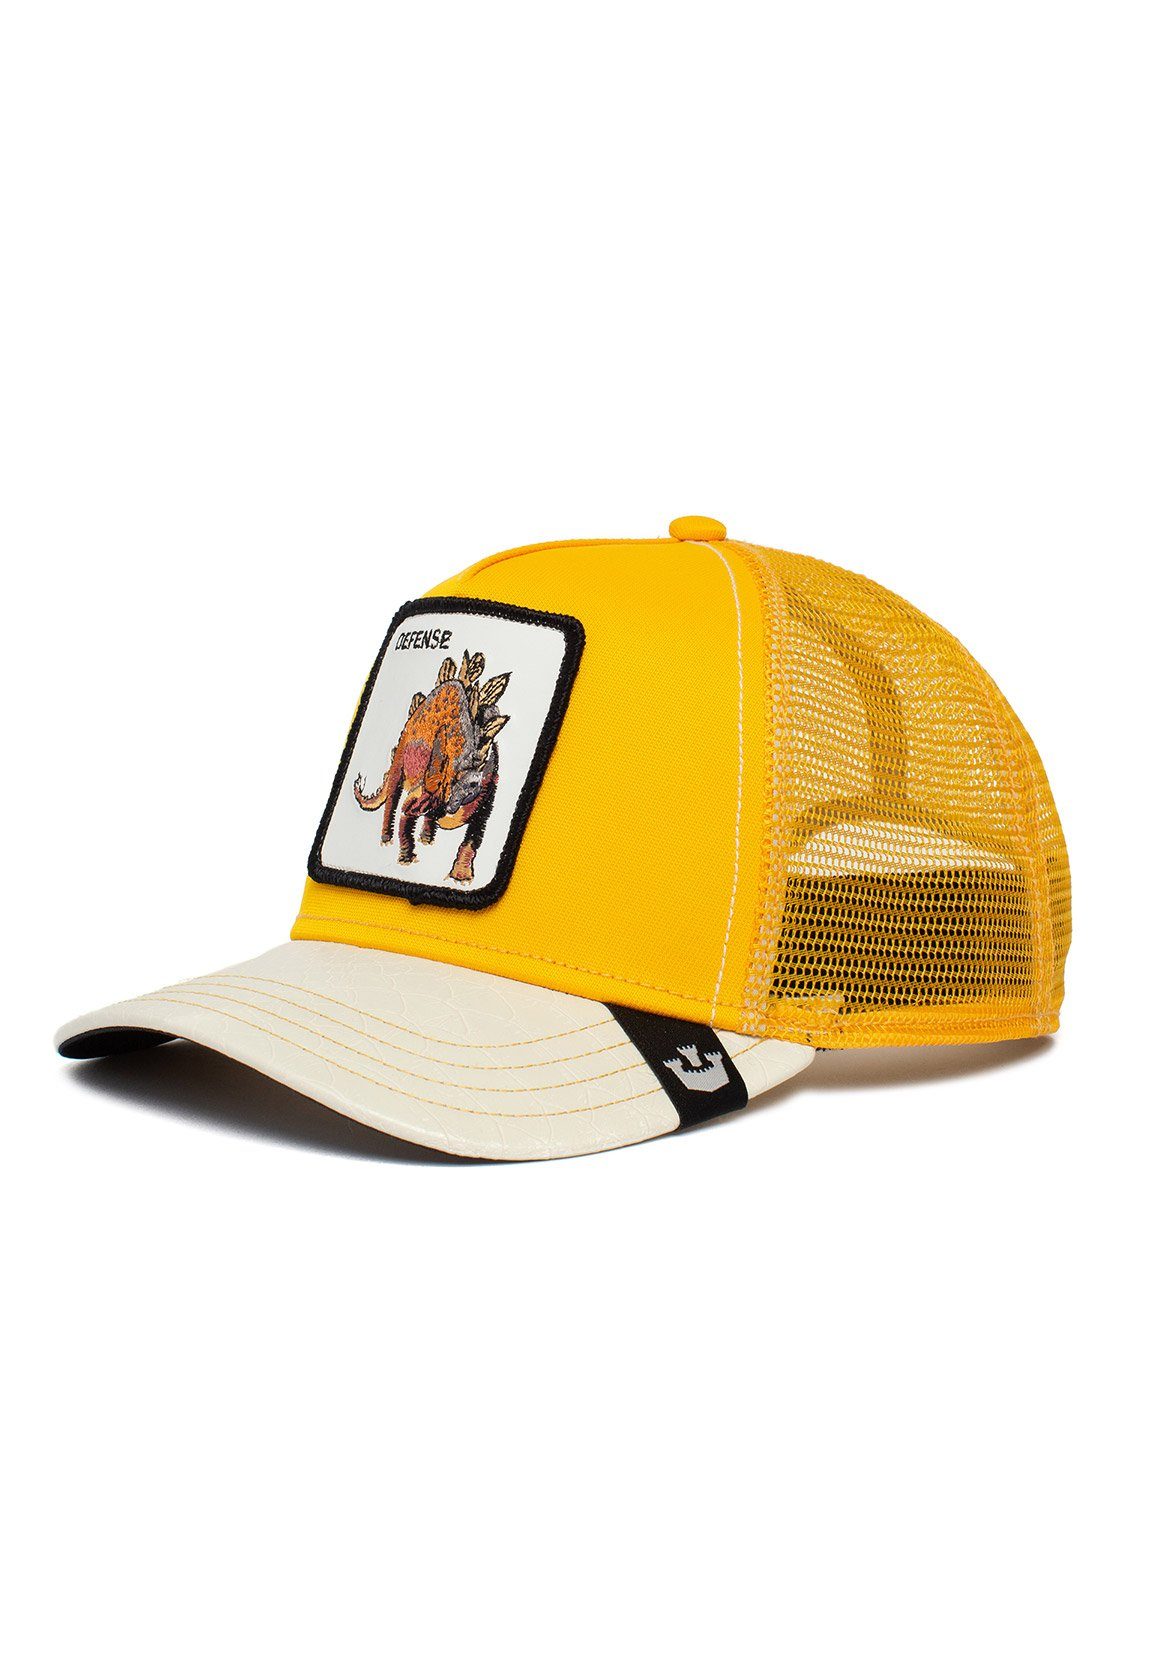 Gelbe Caps online kaufen » Kappen | OTTO | Baseball Caps